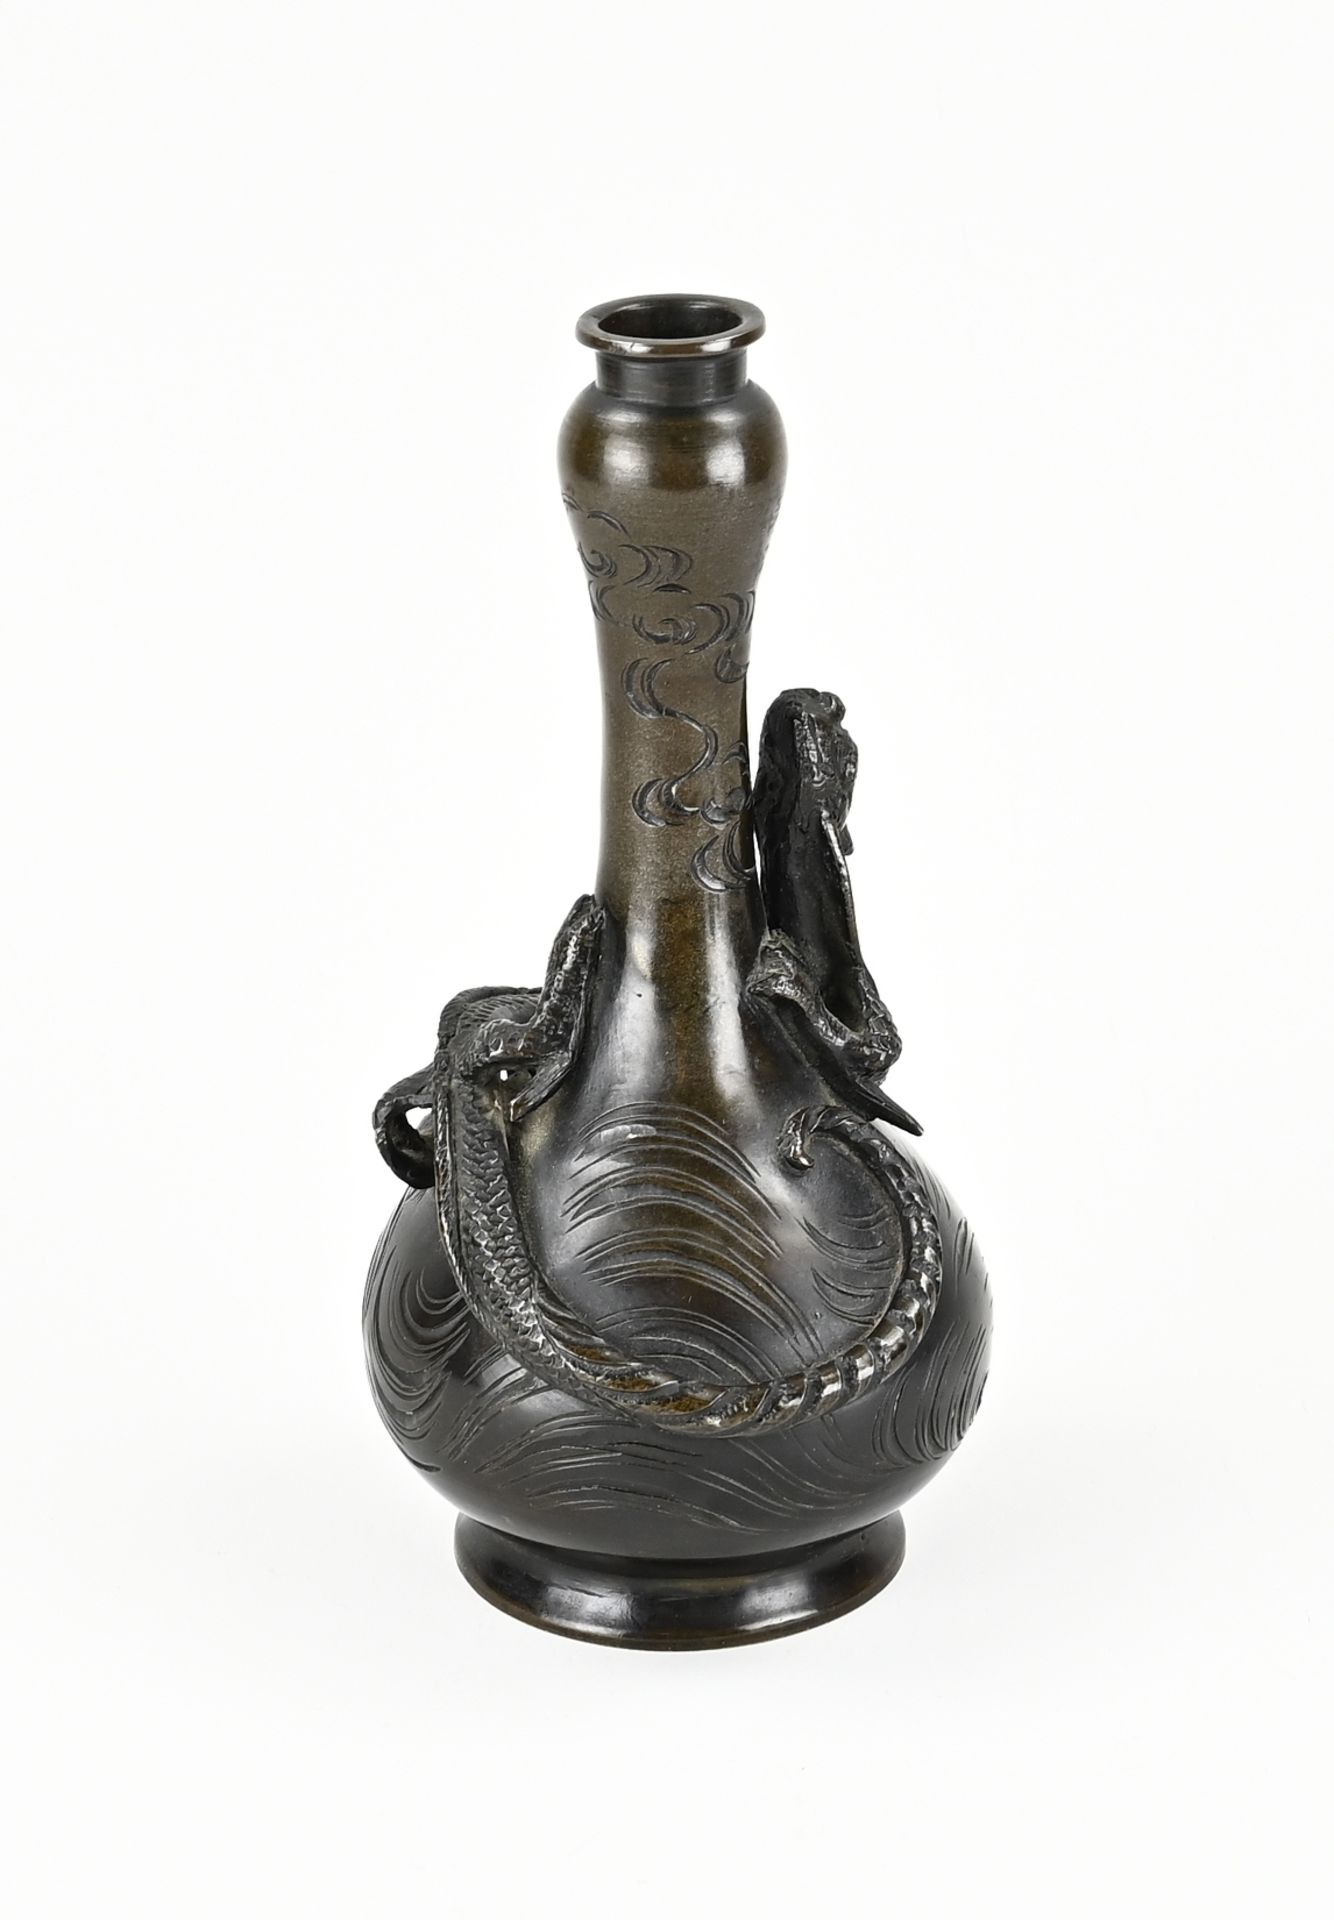 Japanese/Chinese bronze vase, H 20.5 cm. - Image 3 of 3